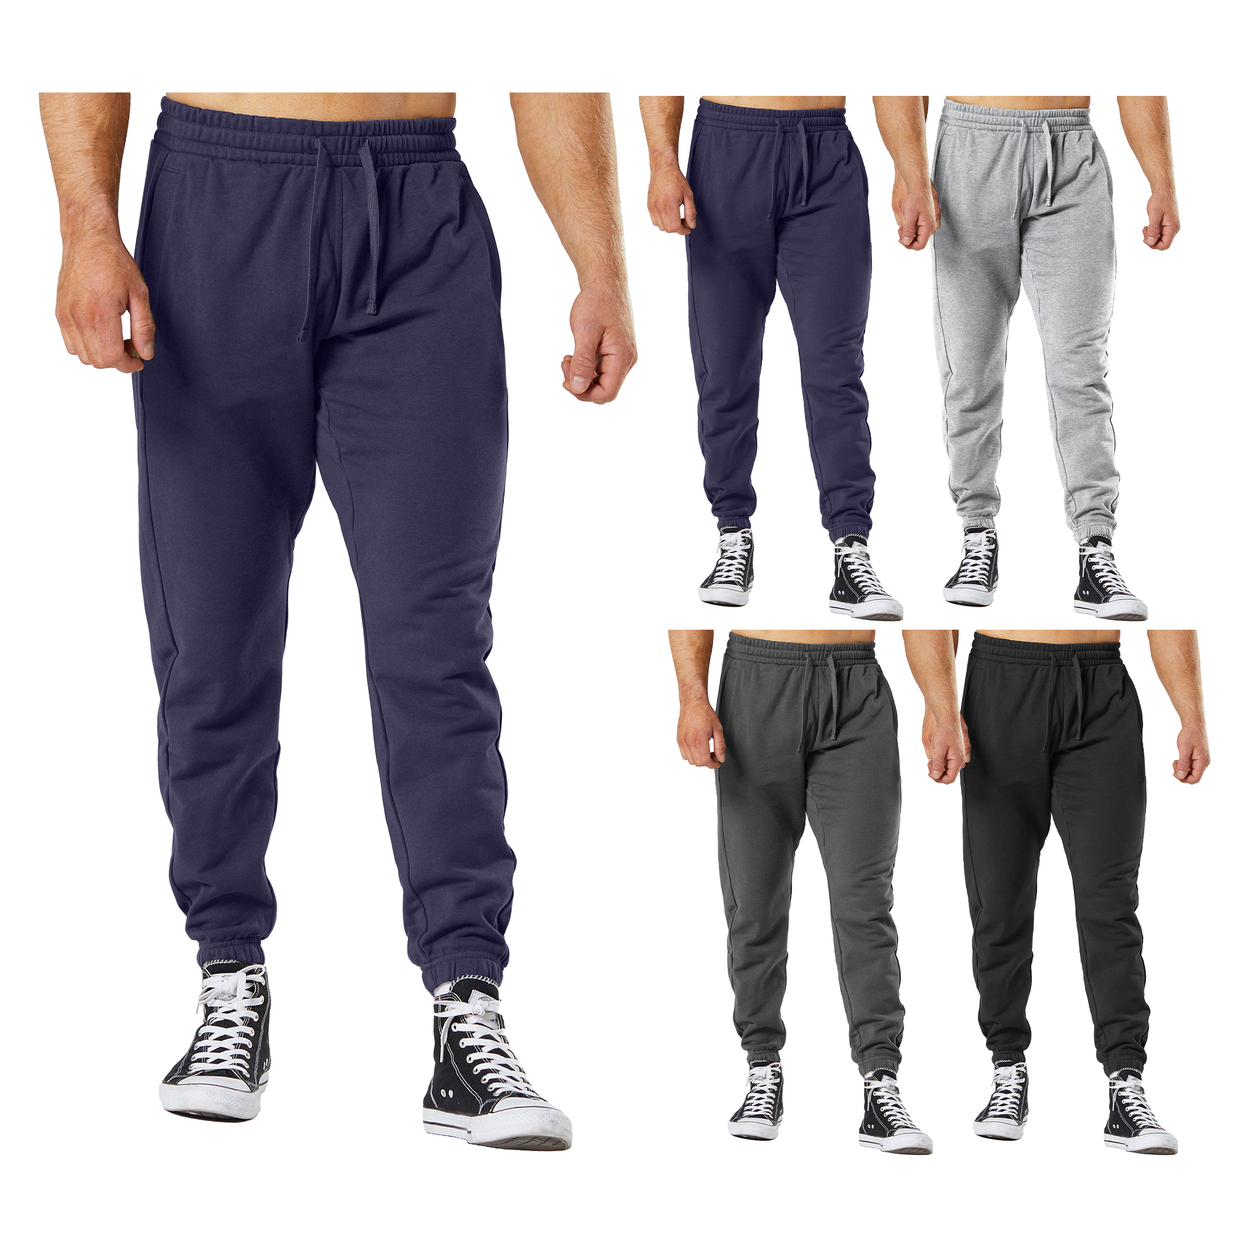 4-Pack: Men's Ultra-Soft Cozy Winter Warm Casual Fleece-Lined Sweatpants Jogger - Xx-large